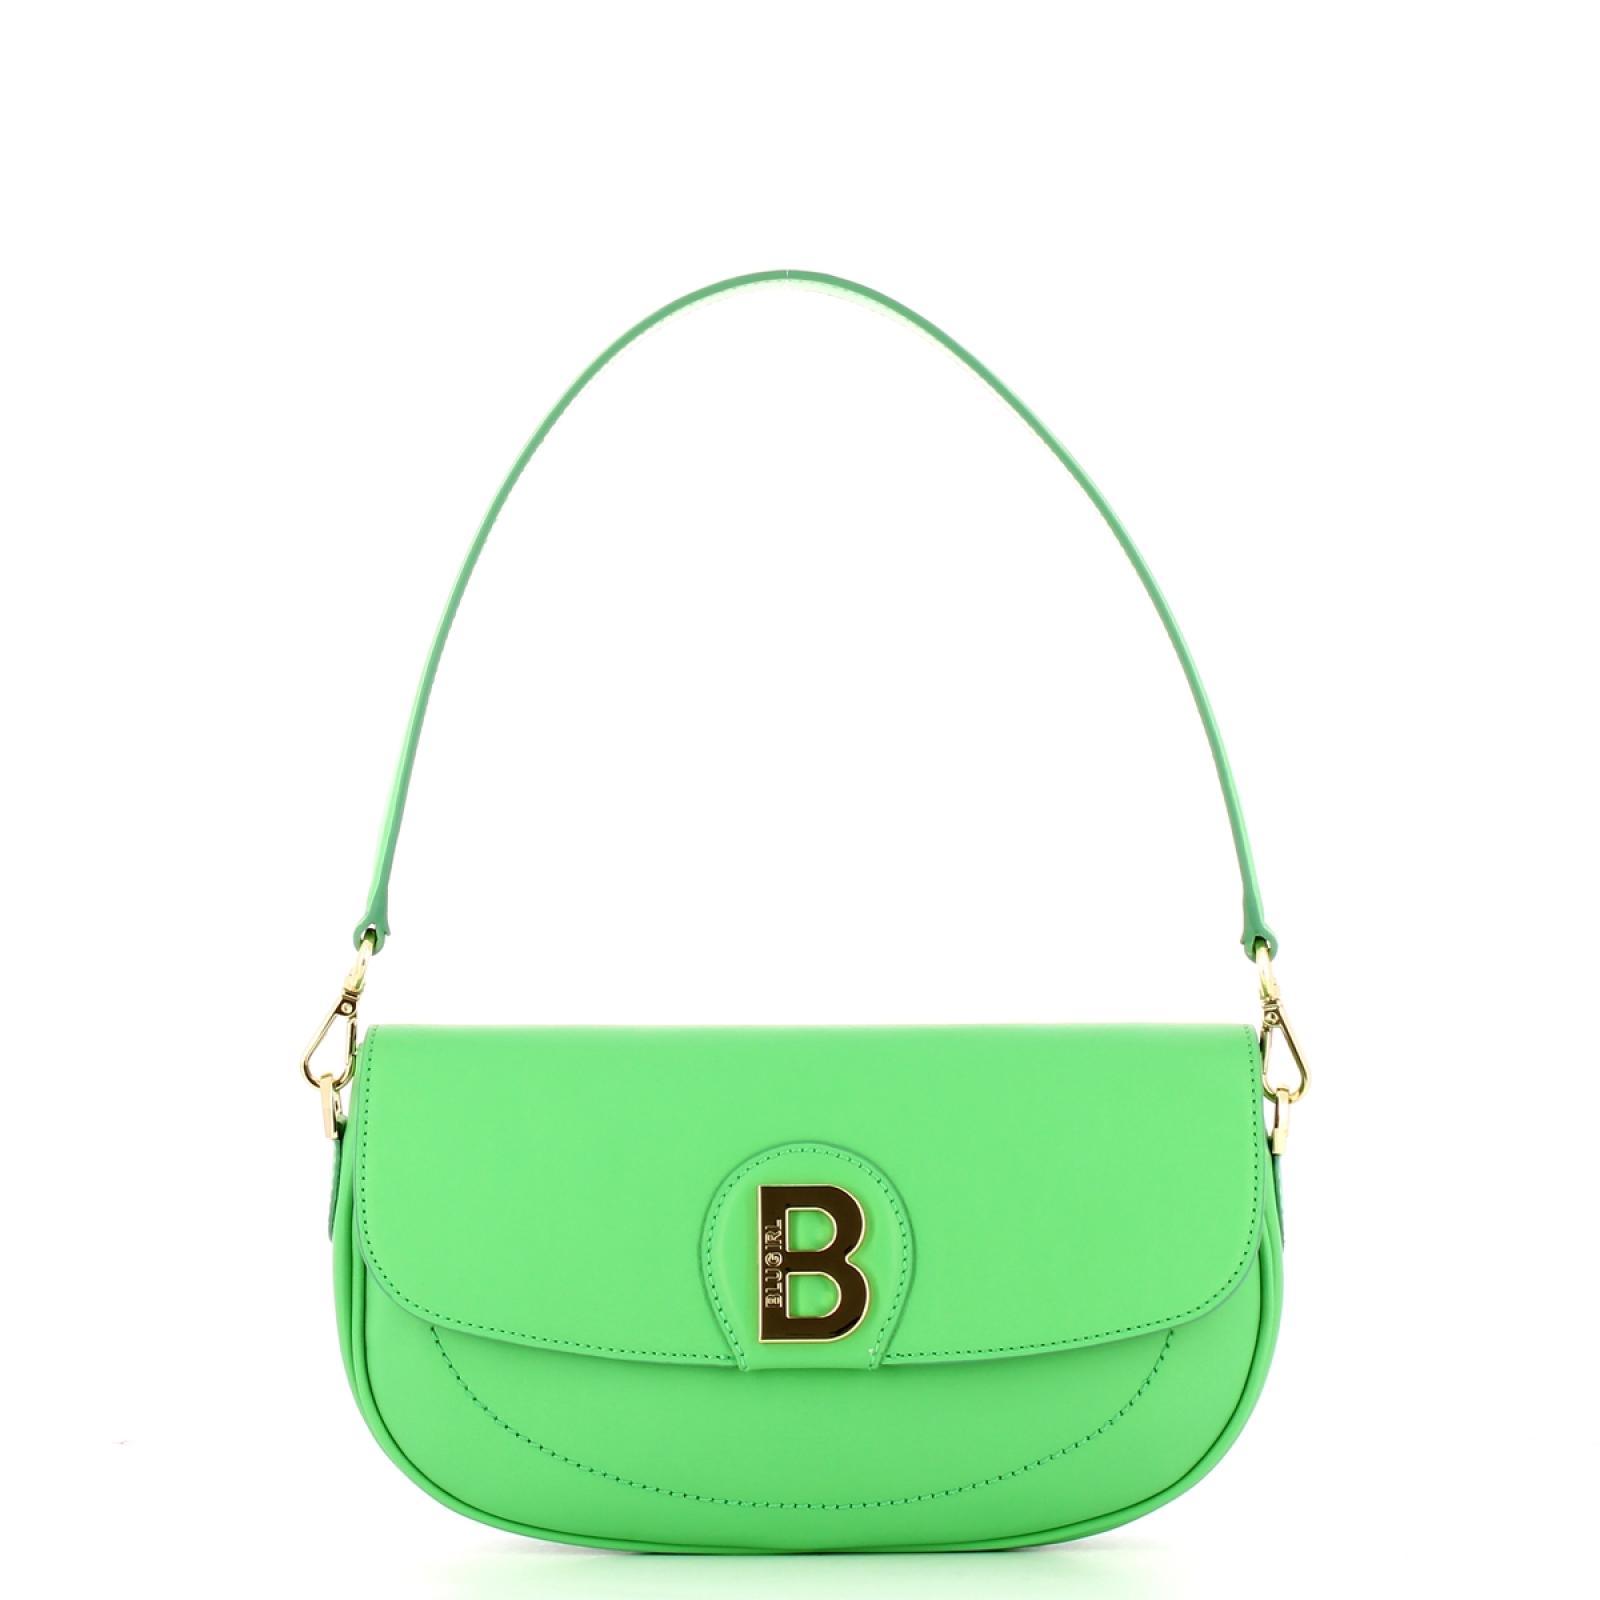 Blugirl Hobo Bag S Grass Green - 1